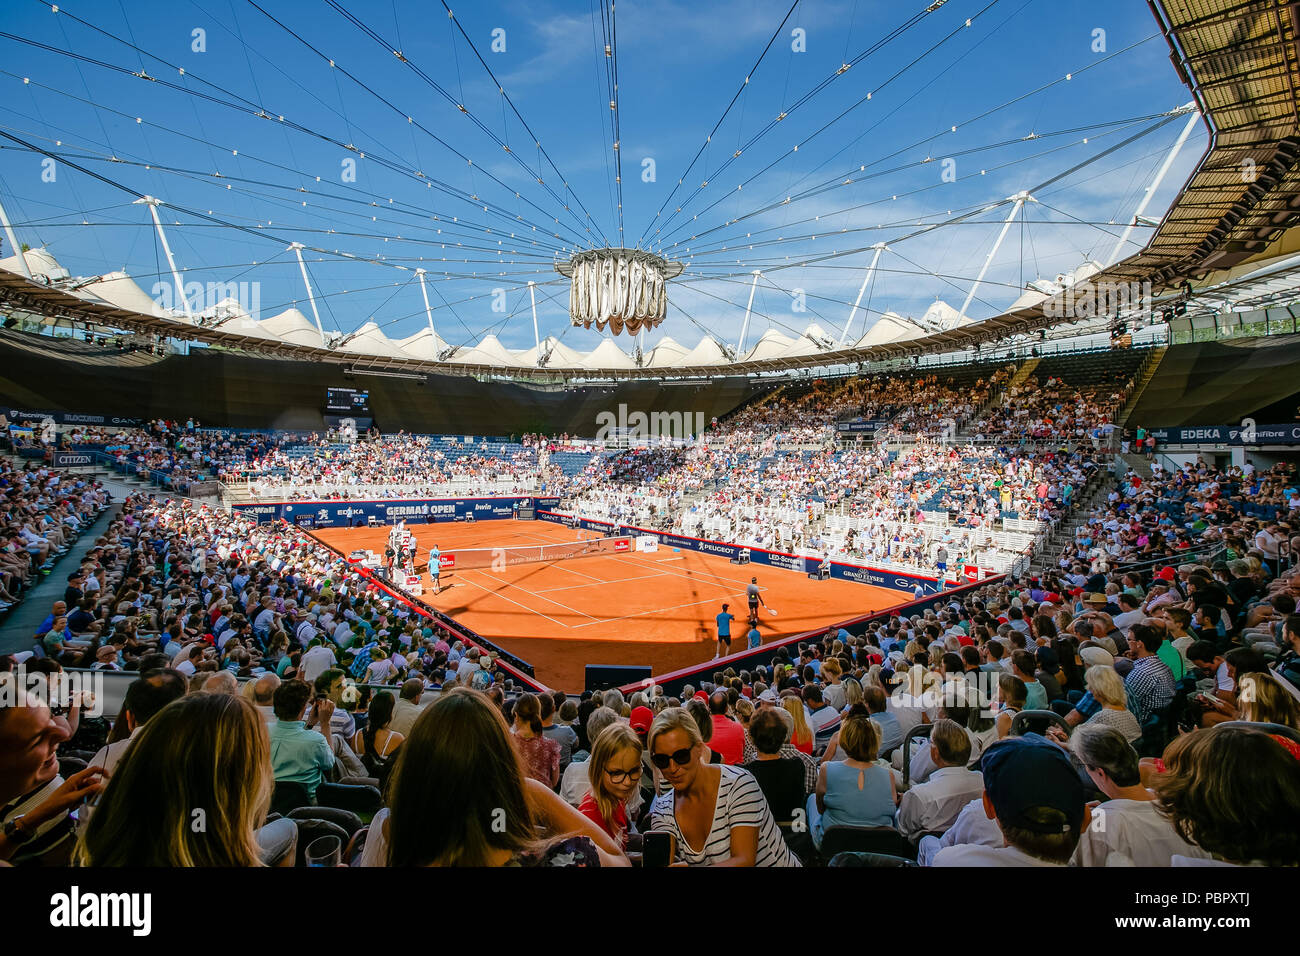 Deutscher tennis bund hi-res stock photography and images - Alamy